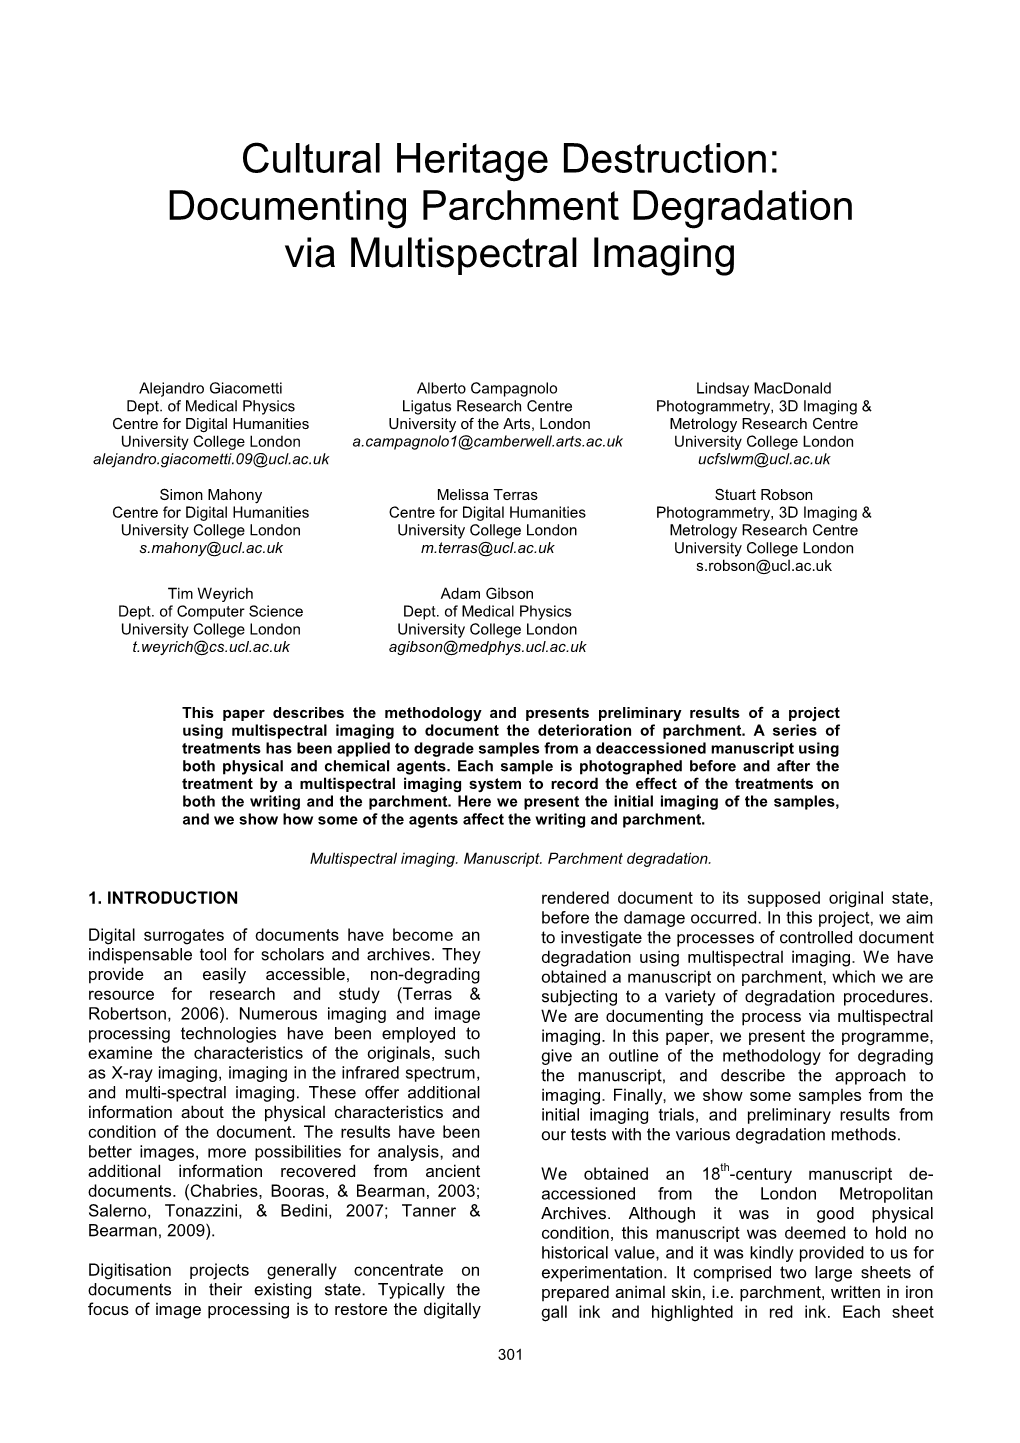 Documenting Parchment Degradation Via Multispectral Imaging